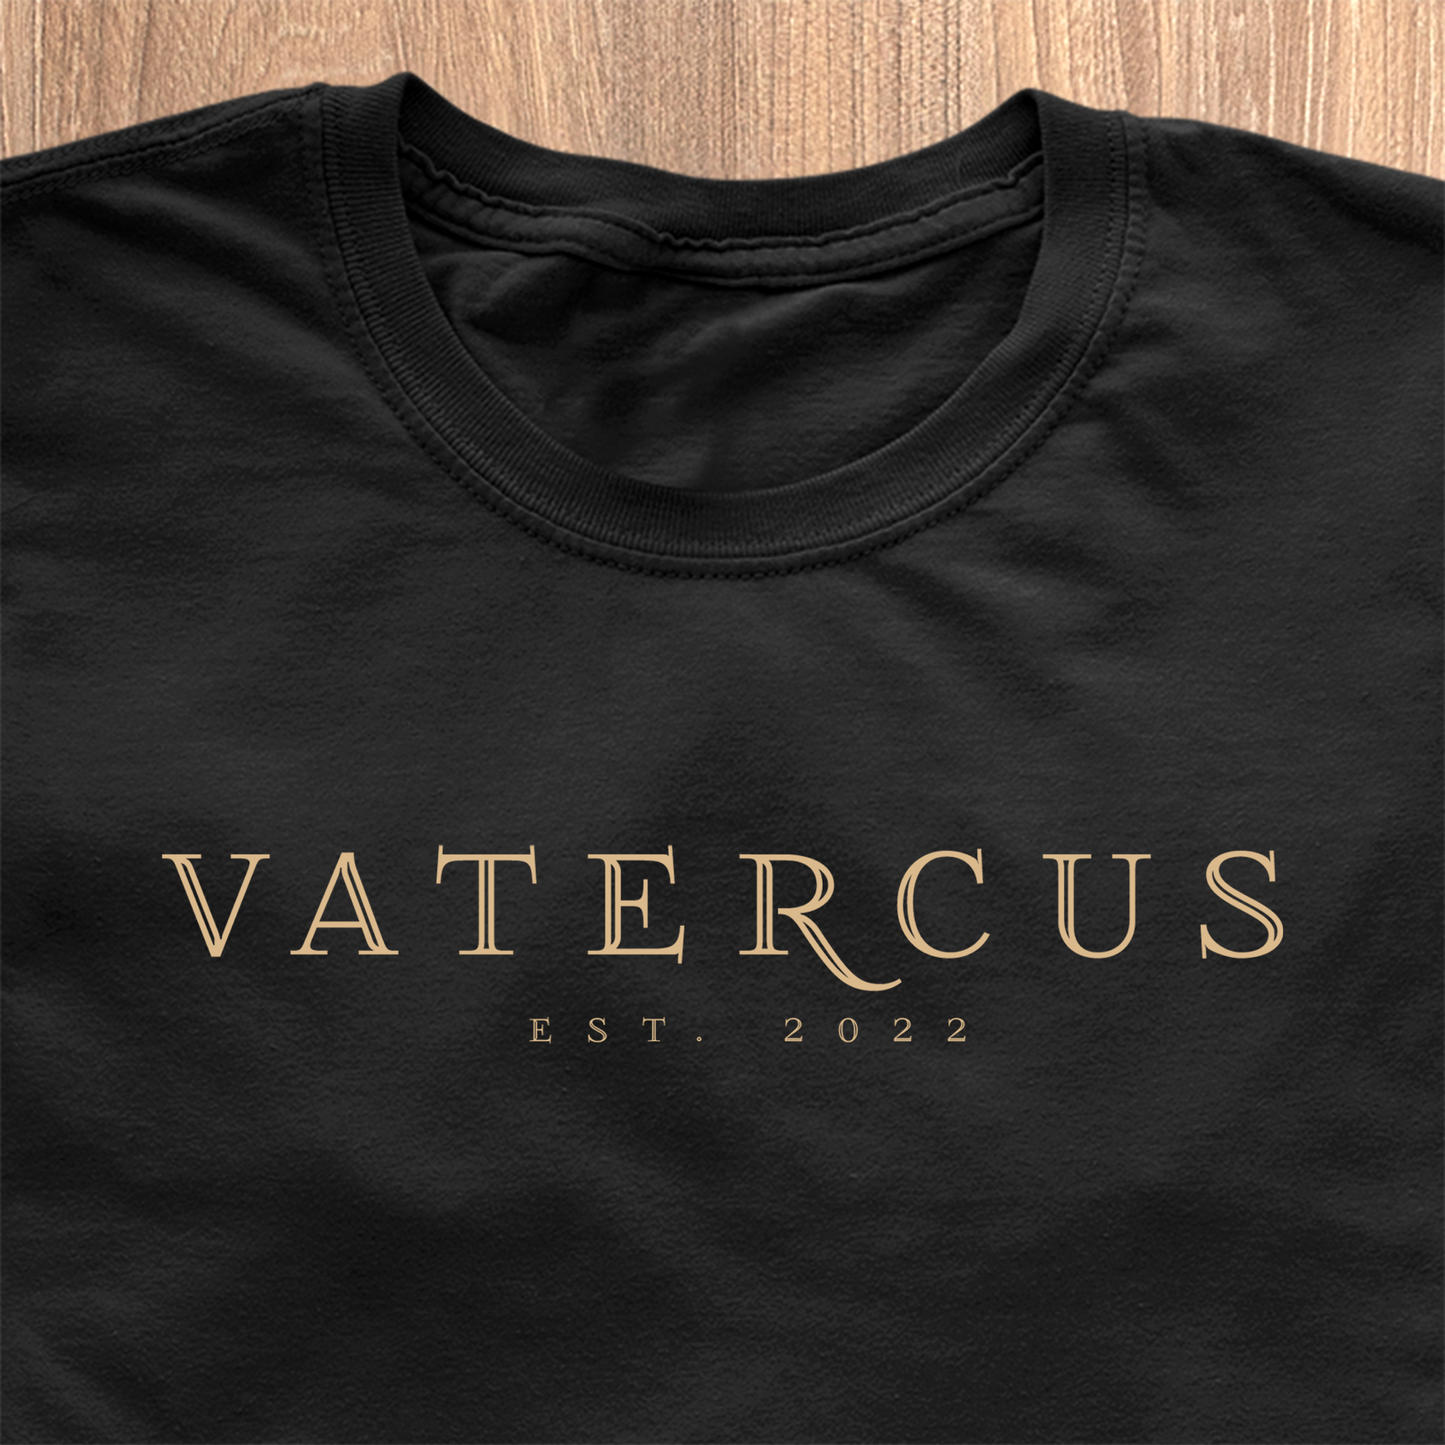 Vatercus T-Shirt - Datum personalisierbar